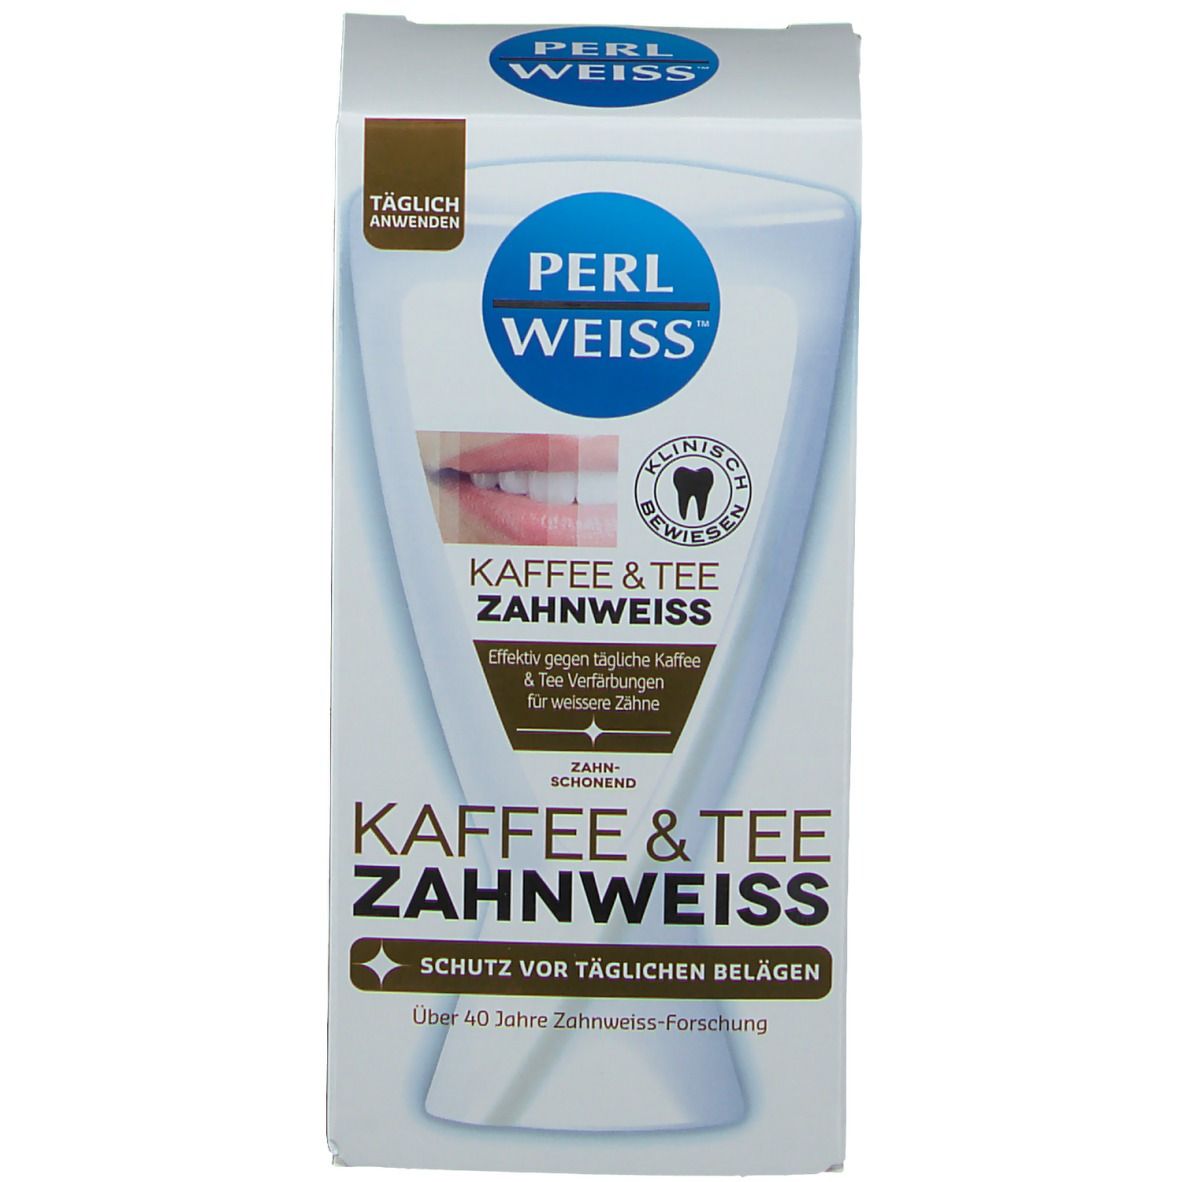 PERLWEISS® Kaffee & Tee-Zahnweiss